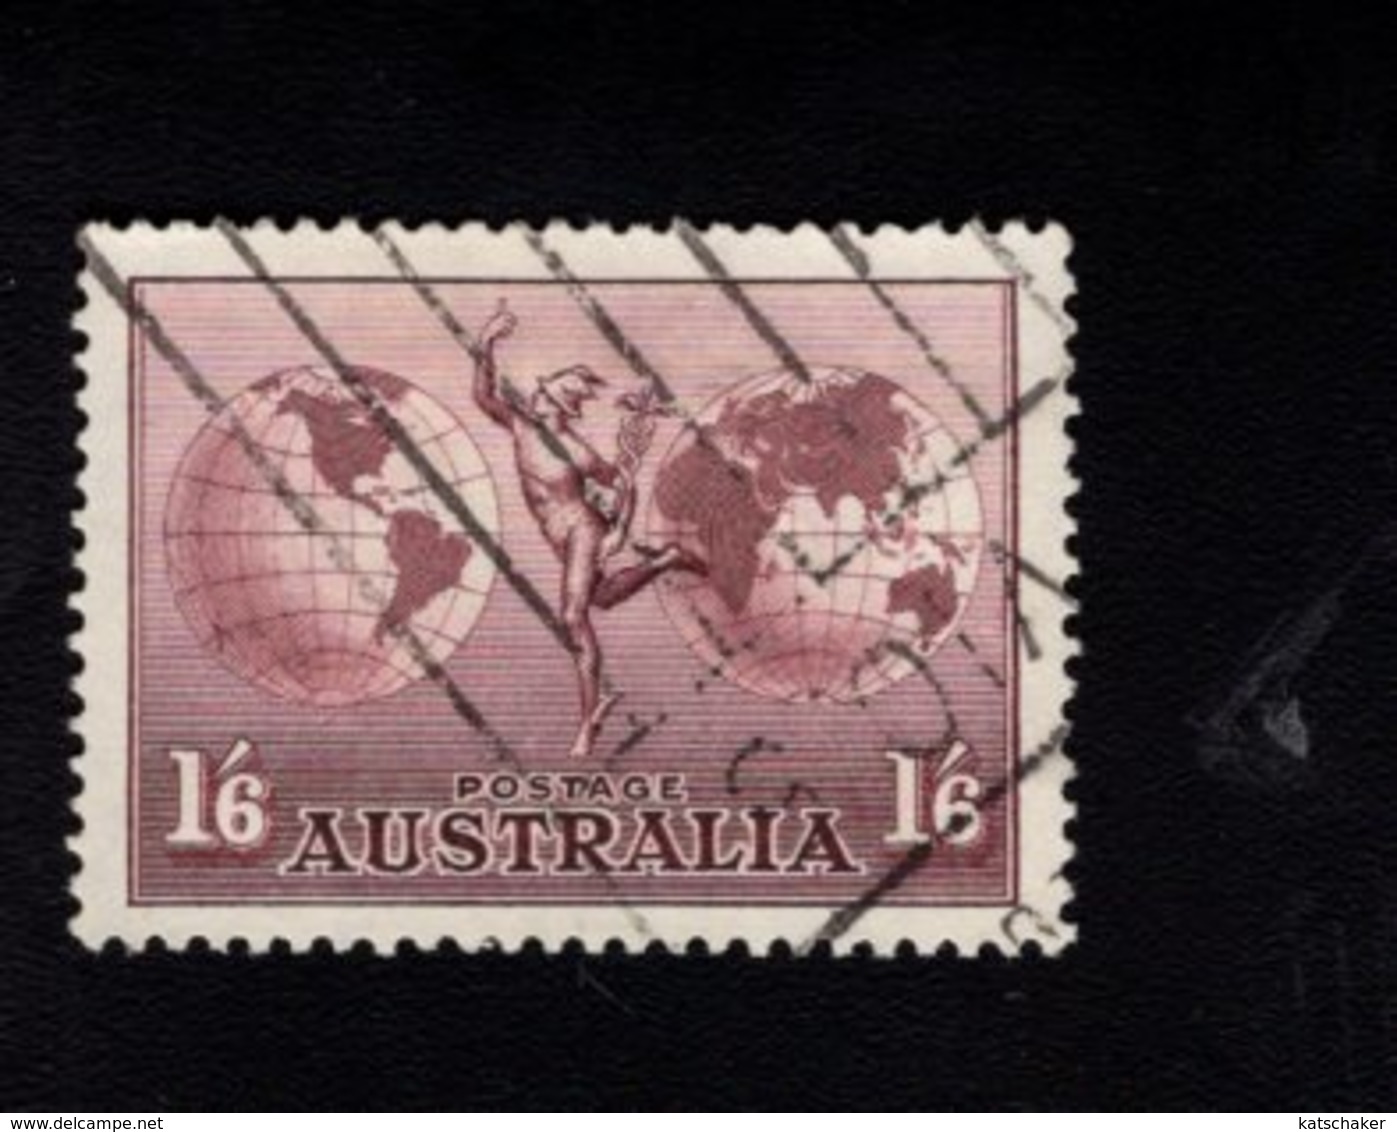 916392754 1937 SCOTT C5 GEBRUIKT USED GEBRAUCHT OBLITERE (O) MERCURY AND HEMISPHERES - Used Stamps